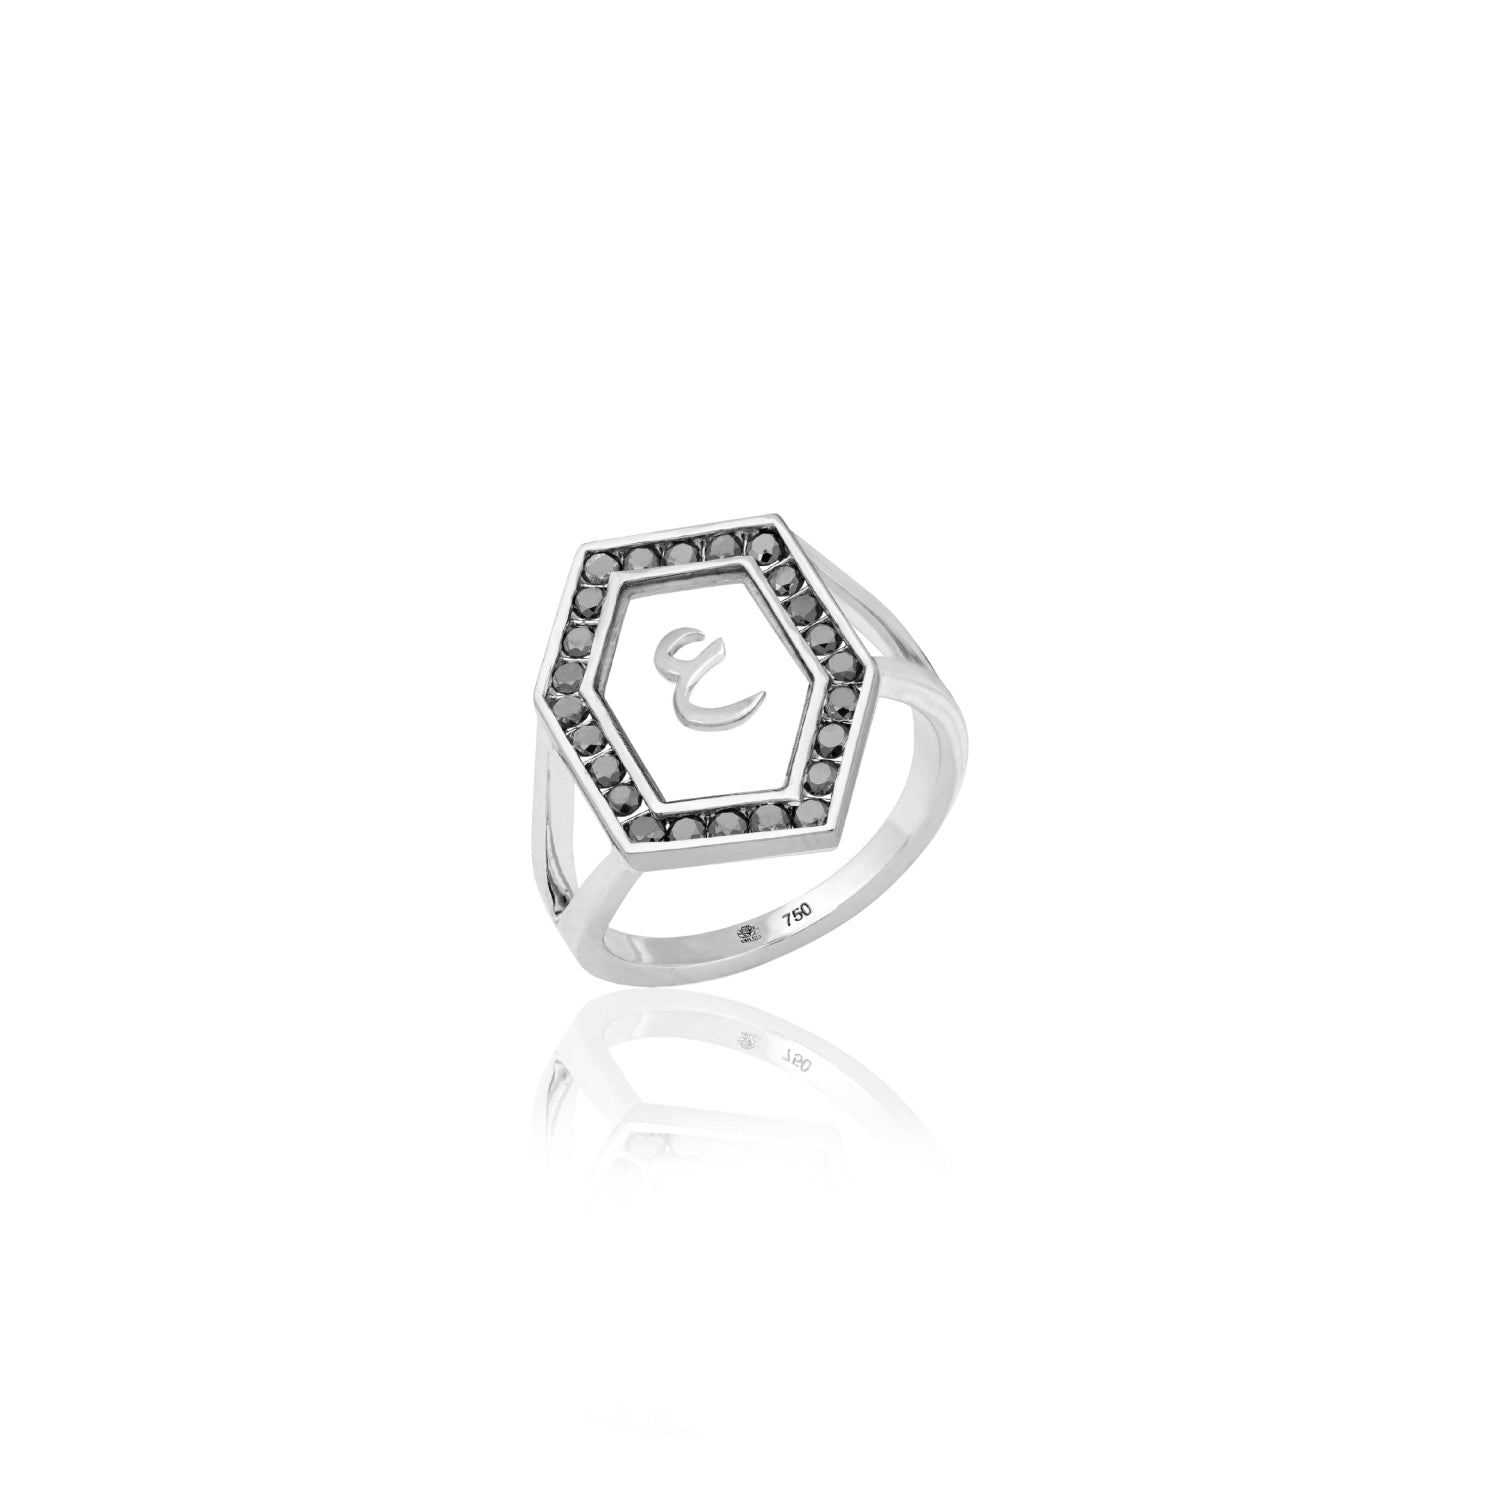 Qamoos 1.0 Letter ع Black Diamond Ring in White Gold